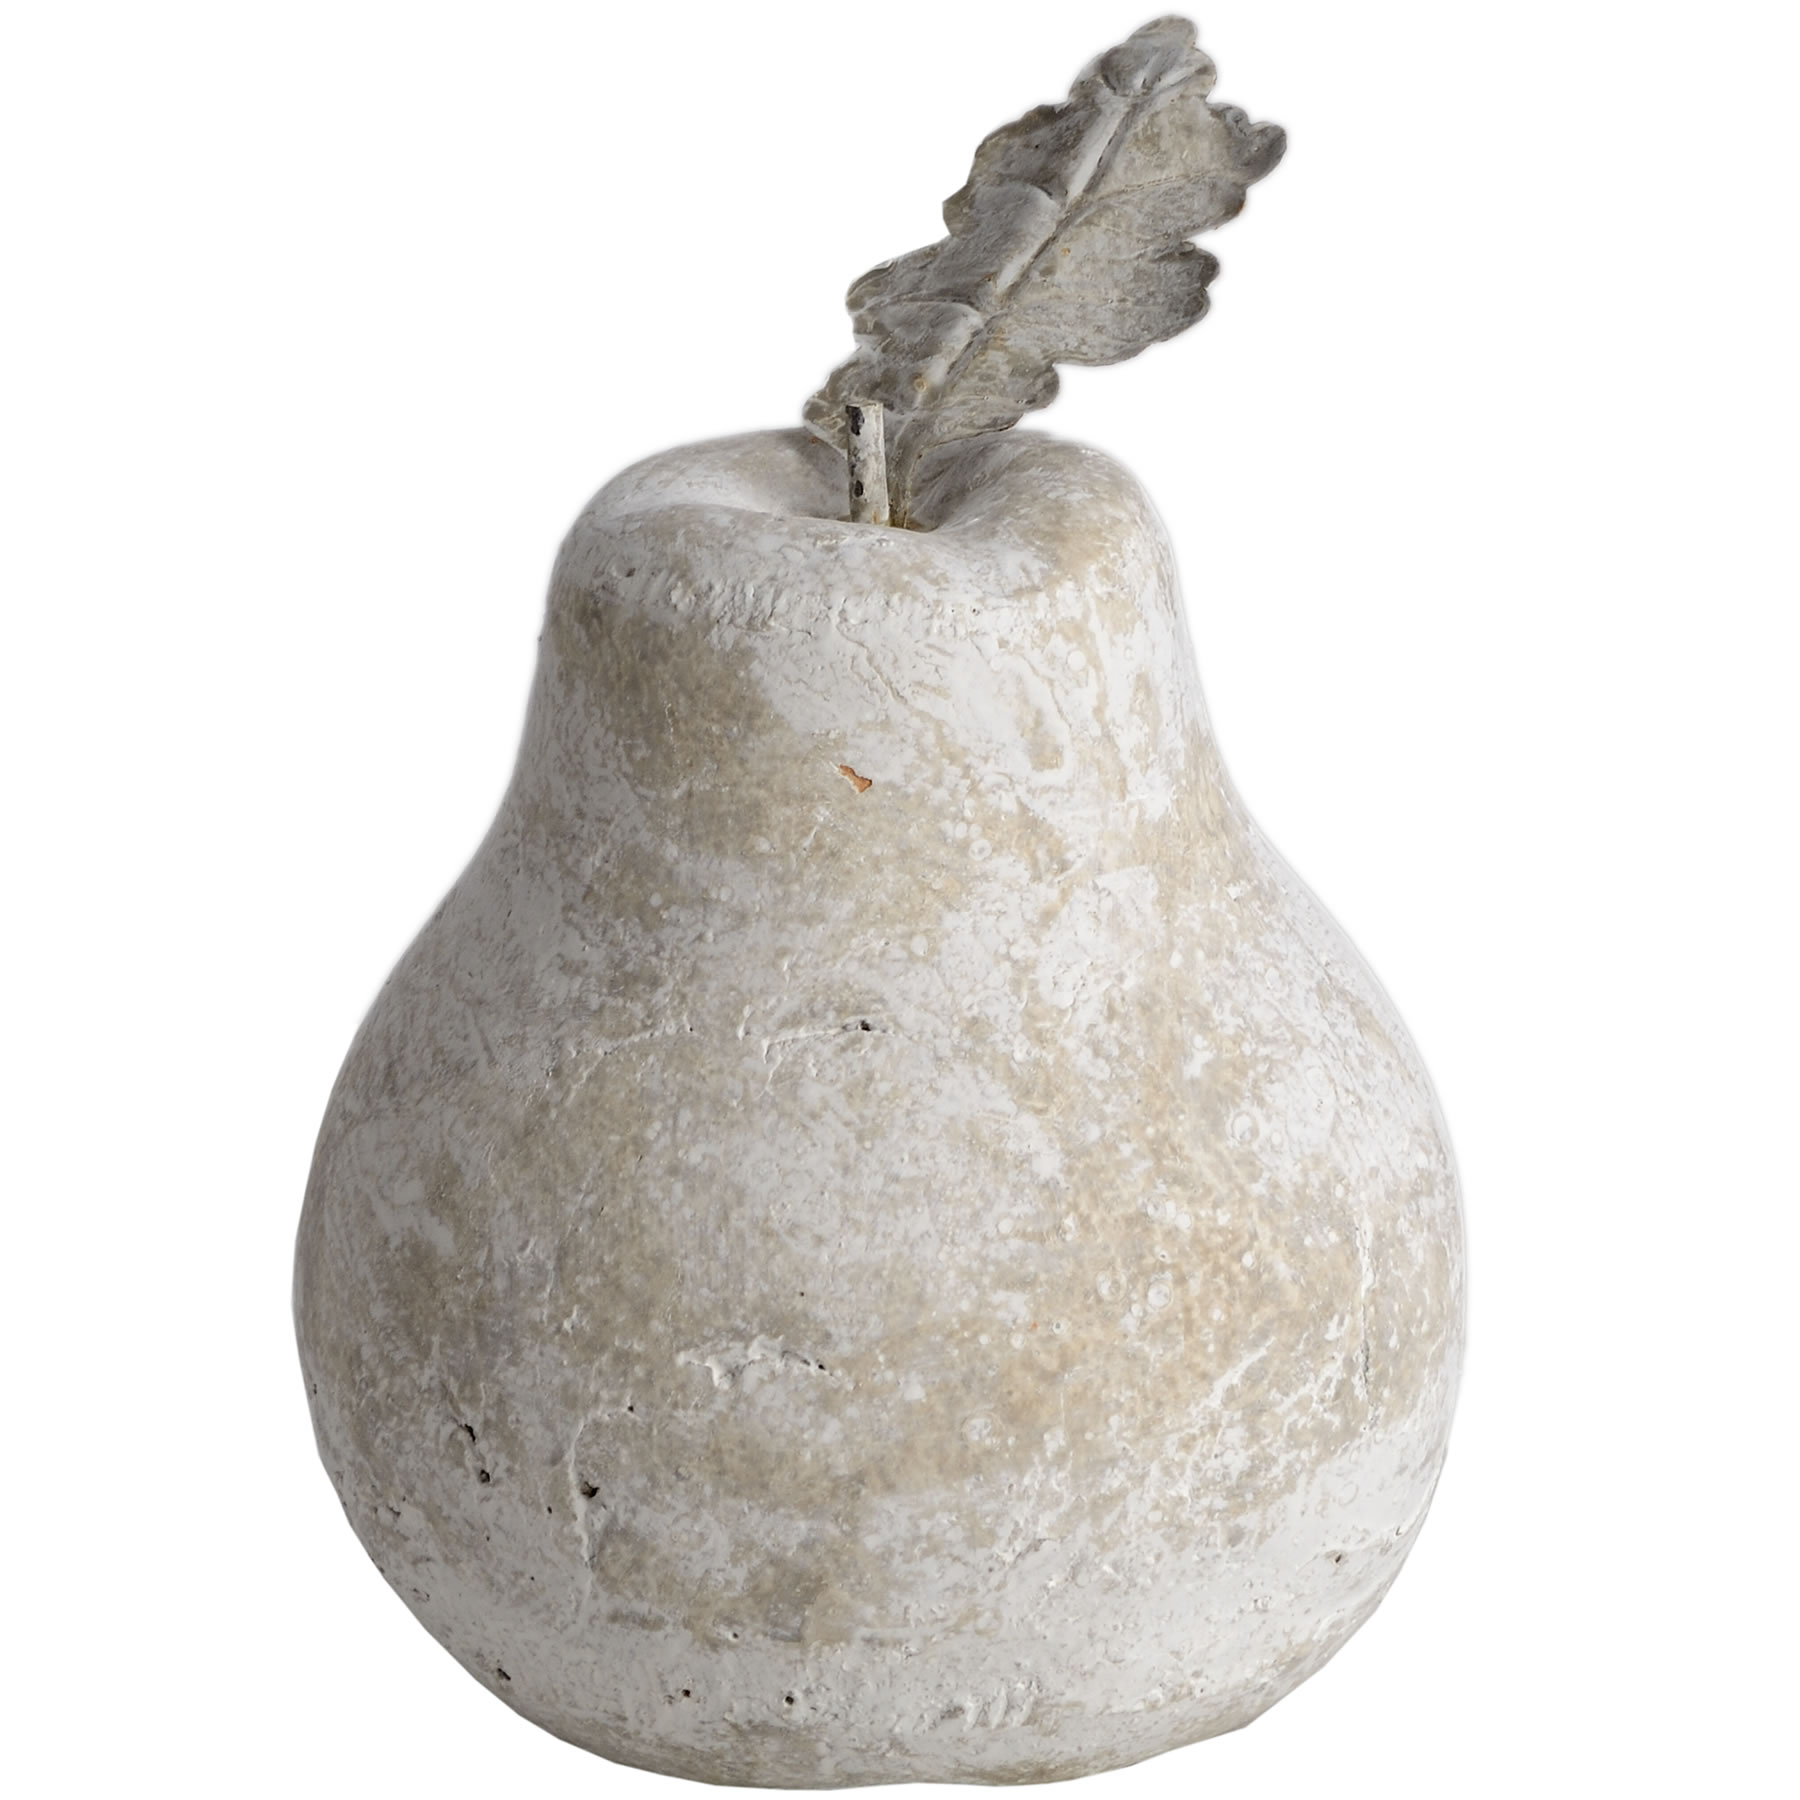 Stone Pear Medium - Image 1